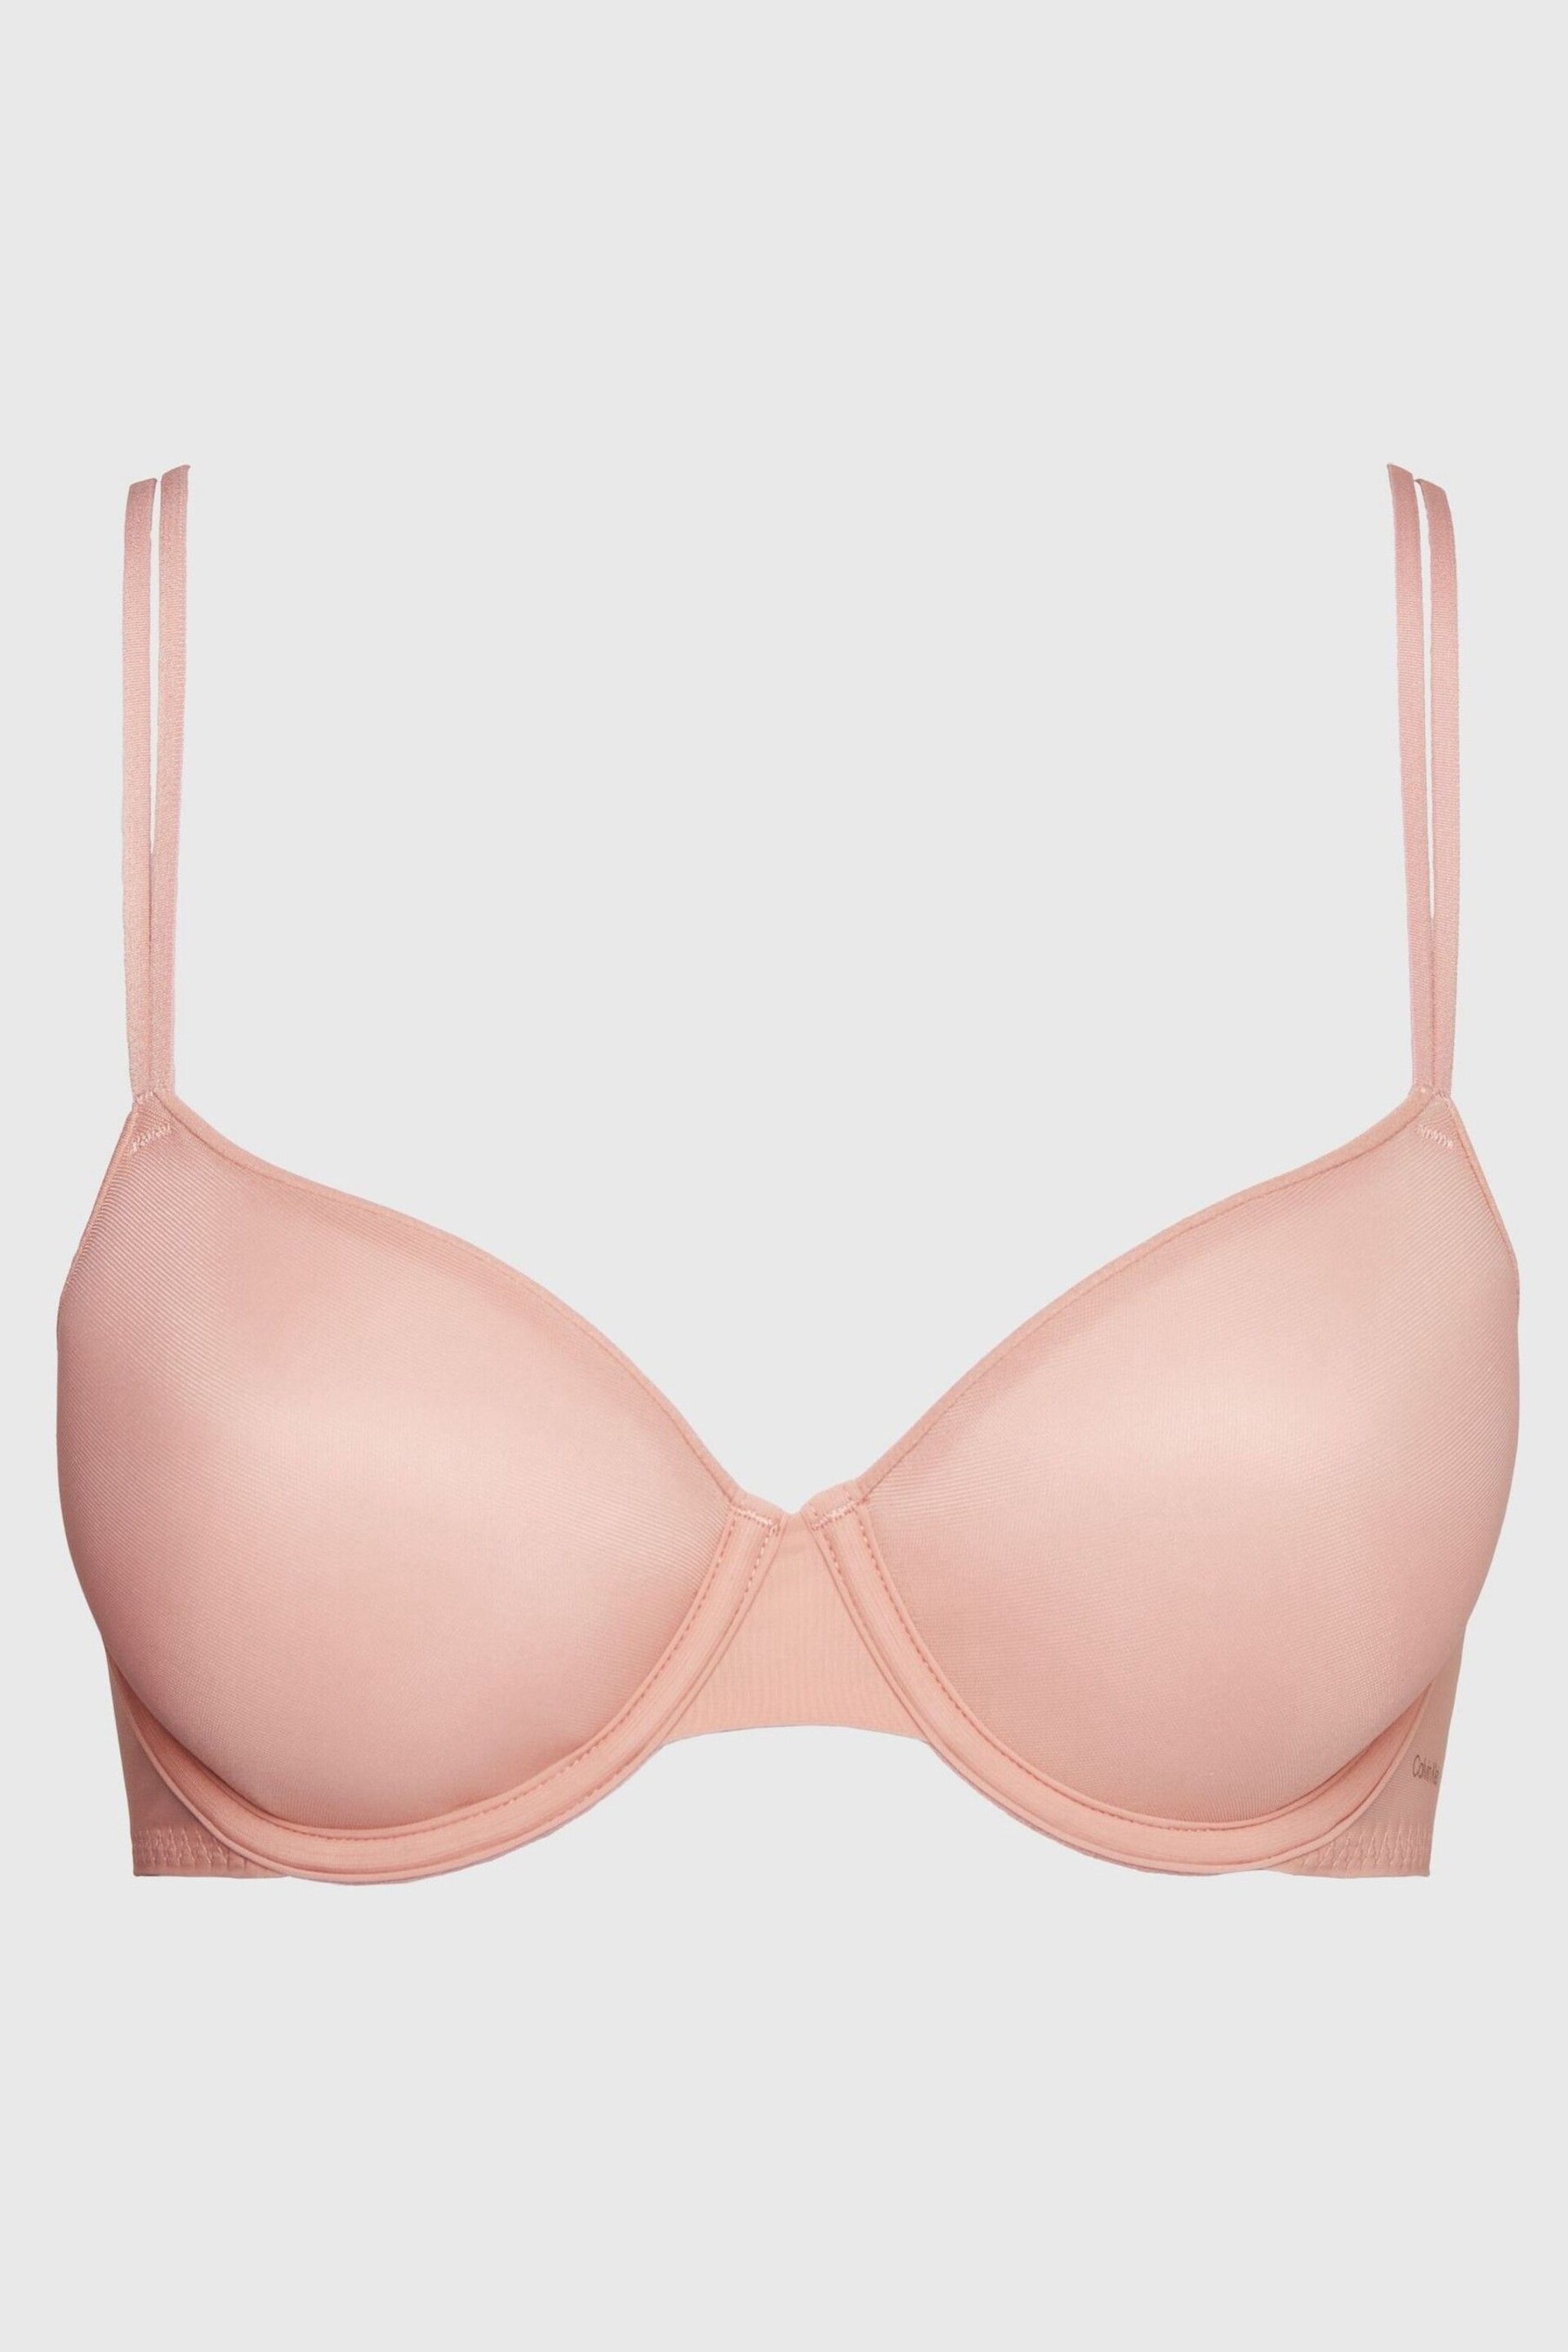 Calvin Klein Pink Sheer Marquisette T-Shirt Bra - Image 5 of 5